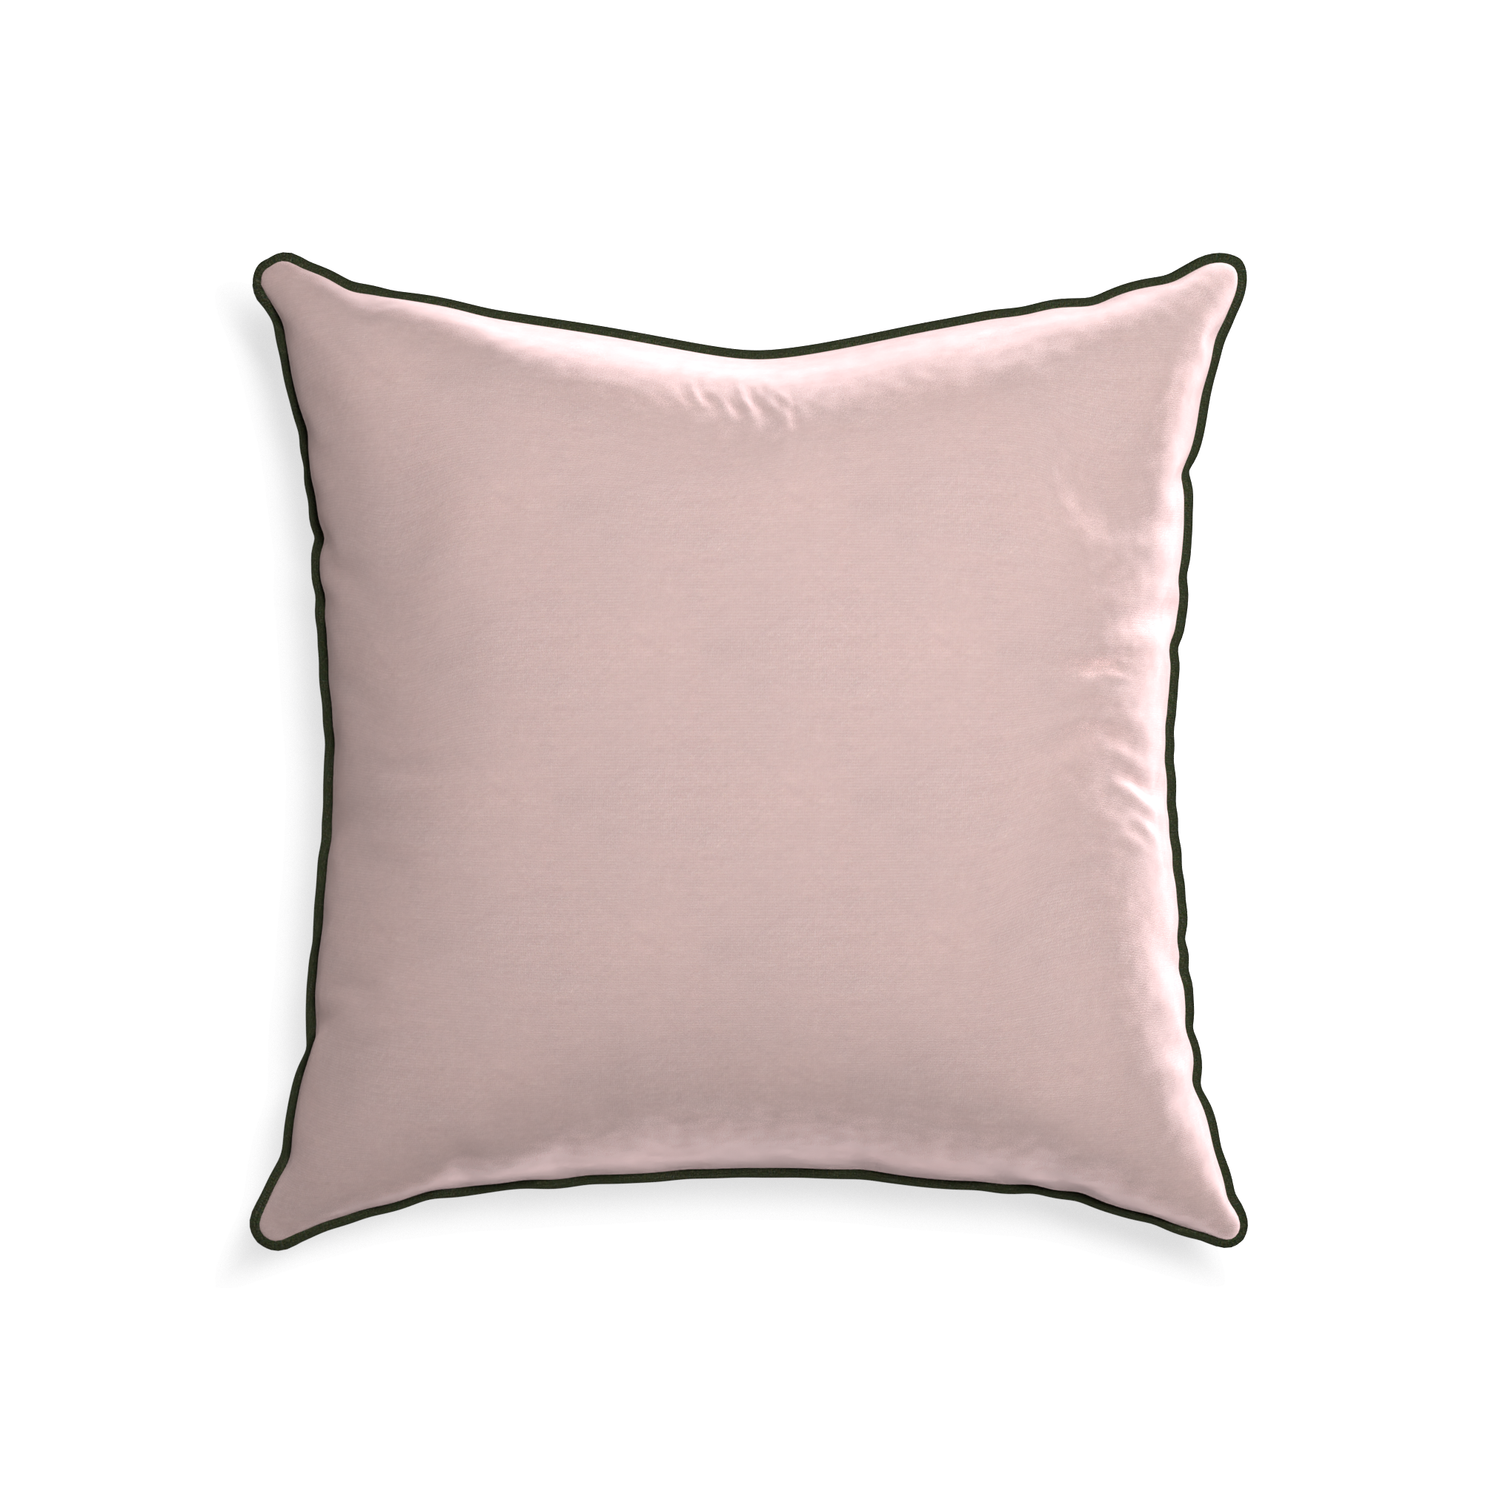 22-square rose velvet custom pillow with f piping on white background